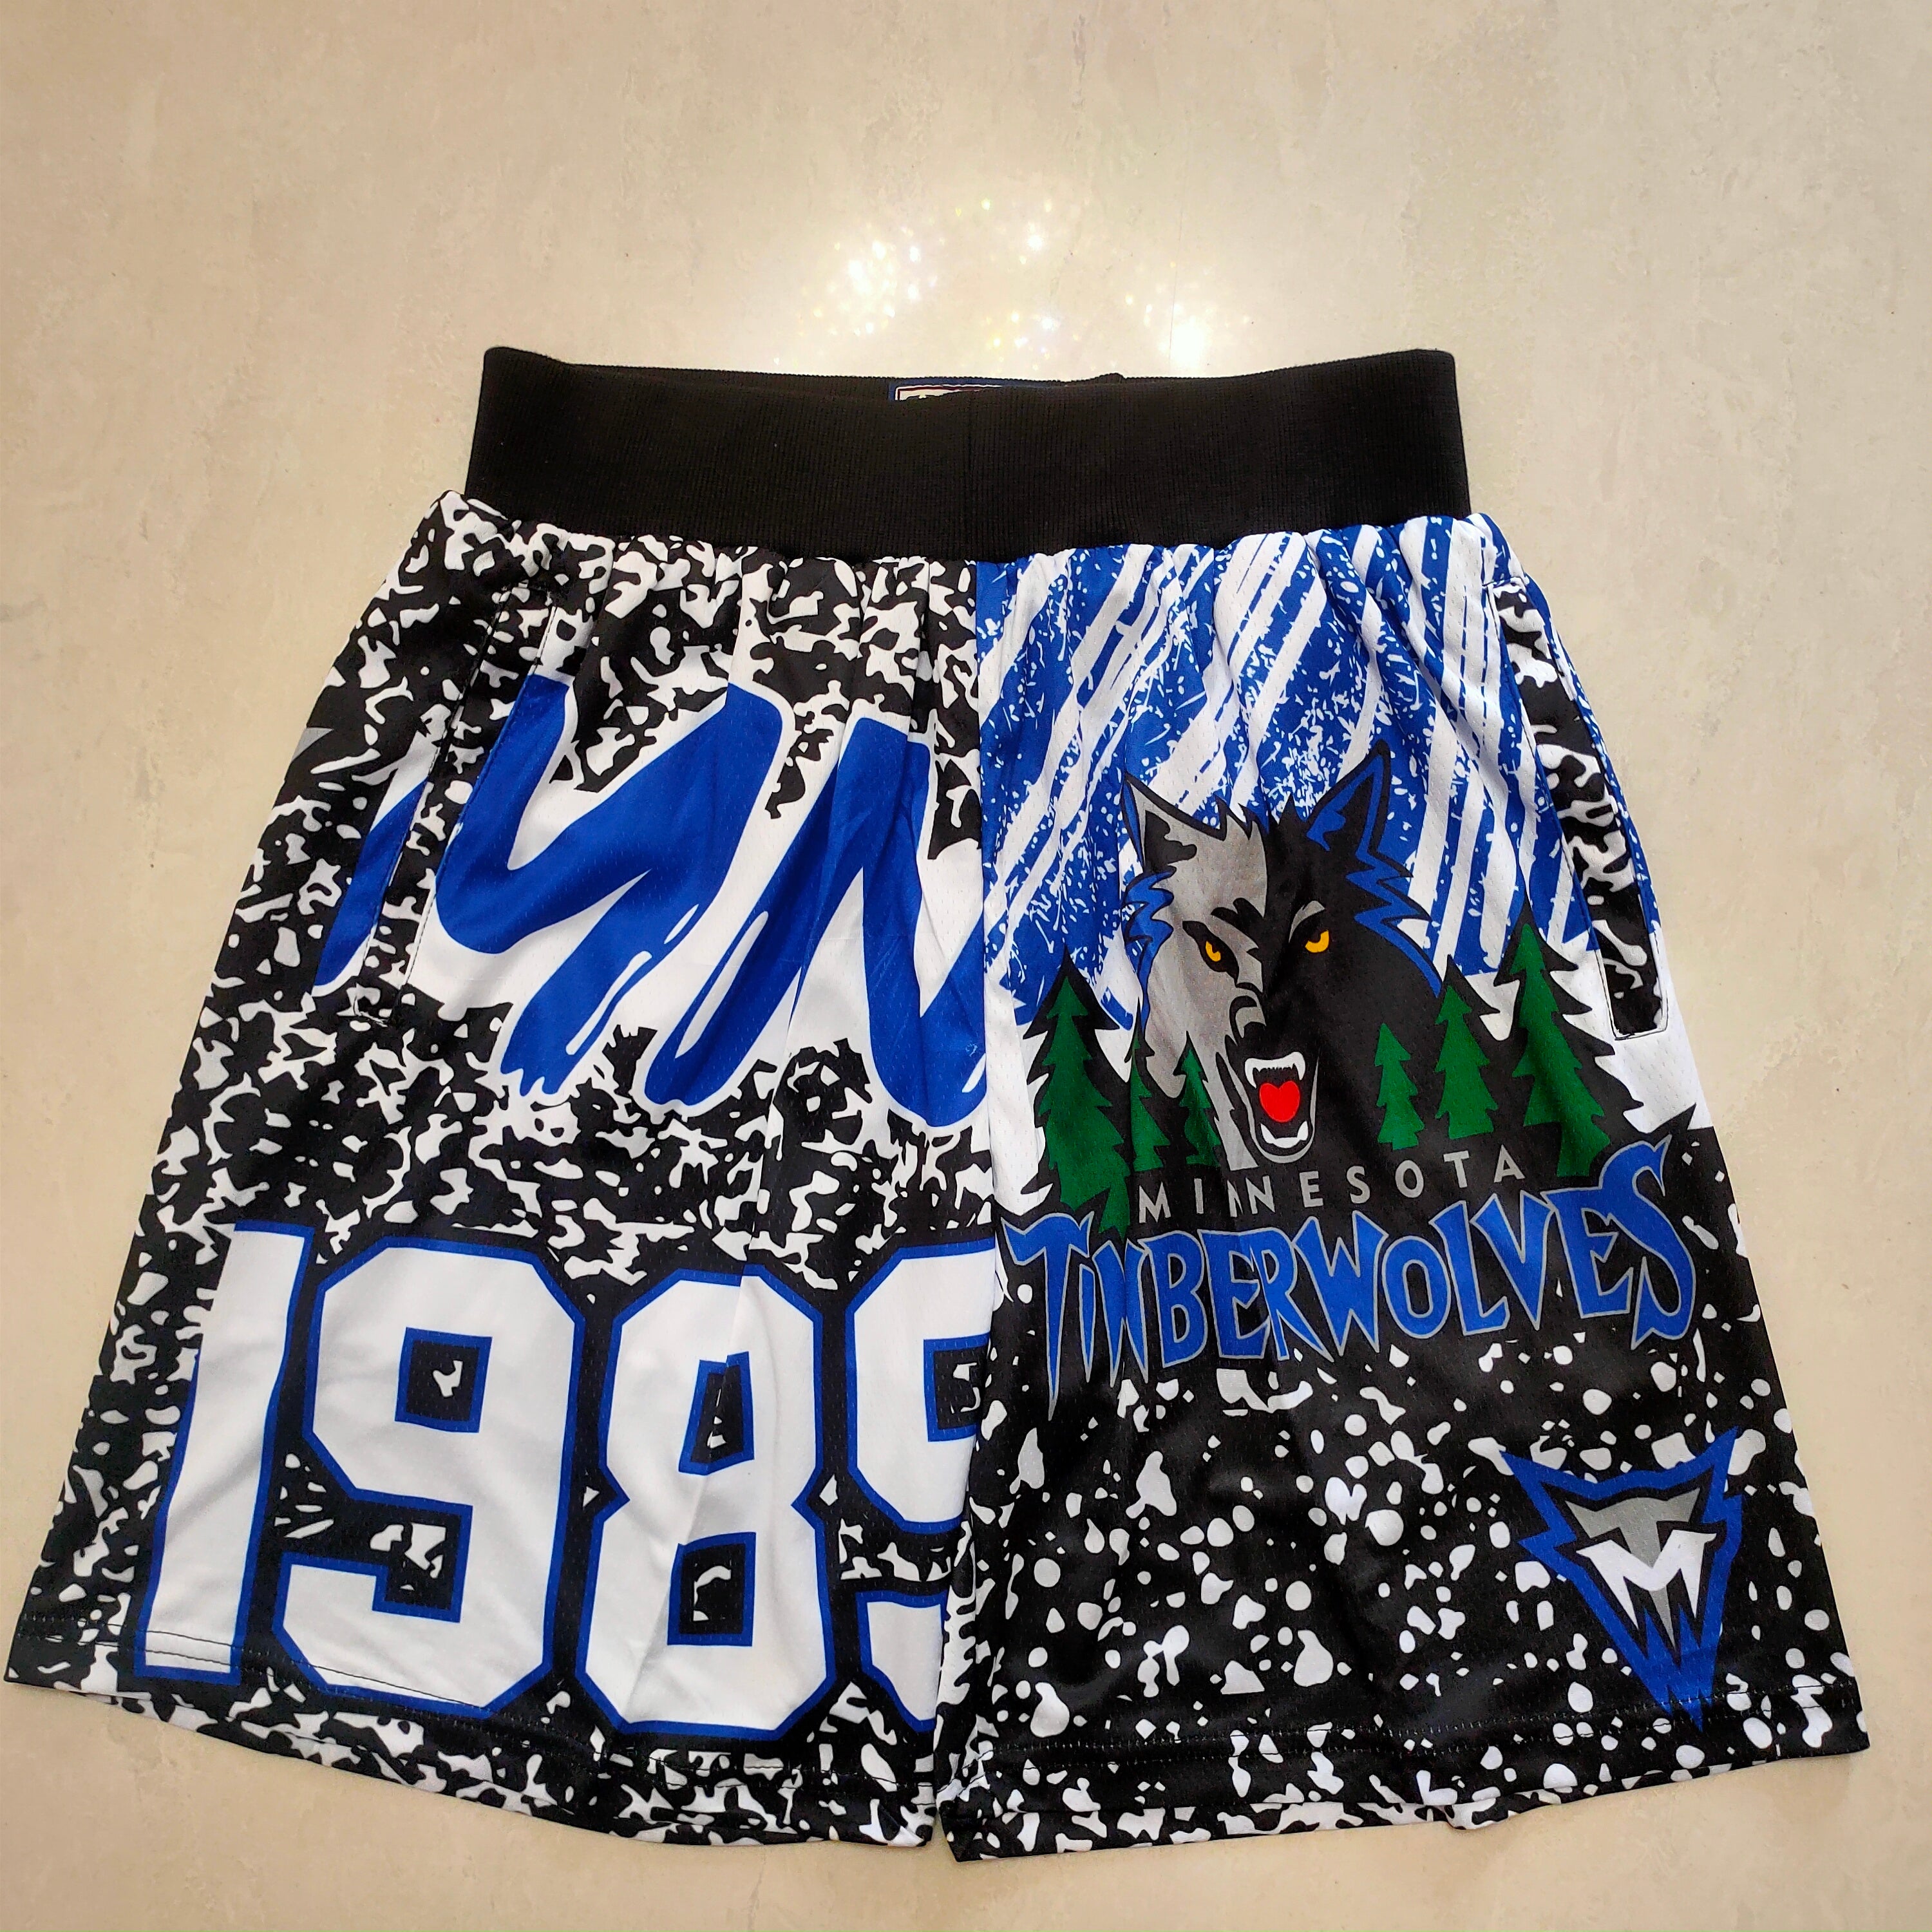 Wolves 1989 shorts